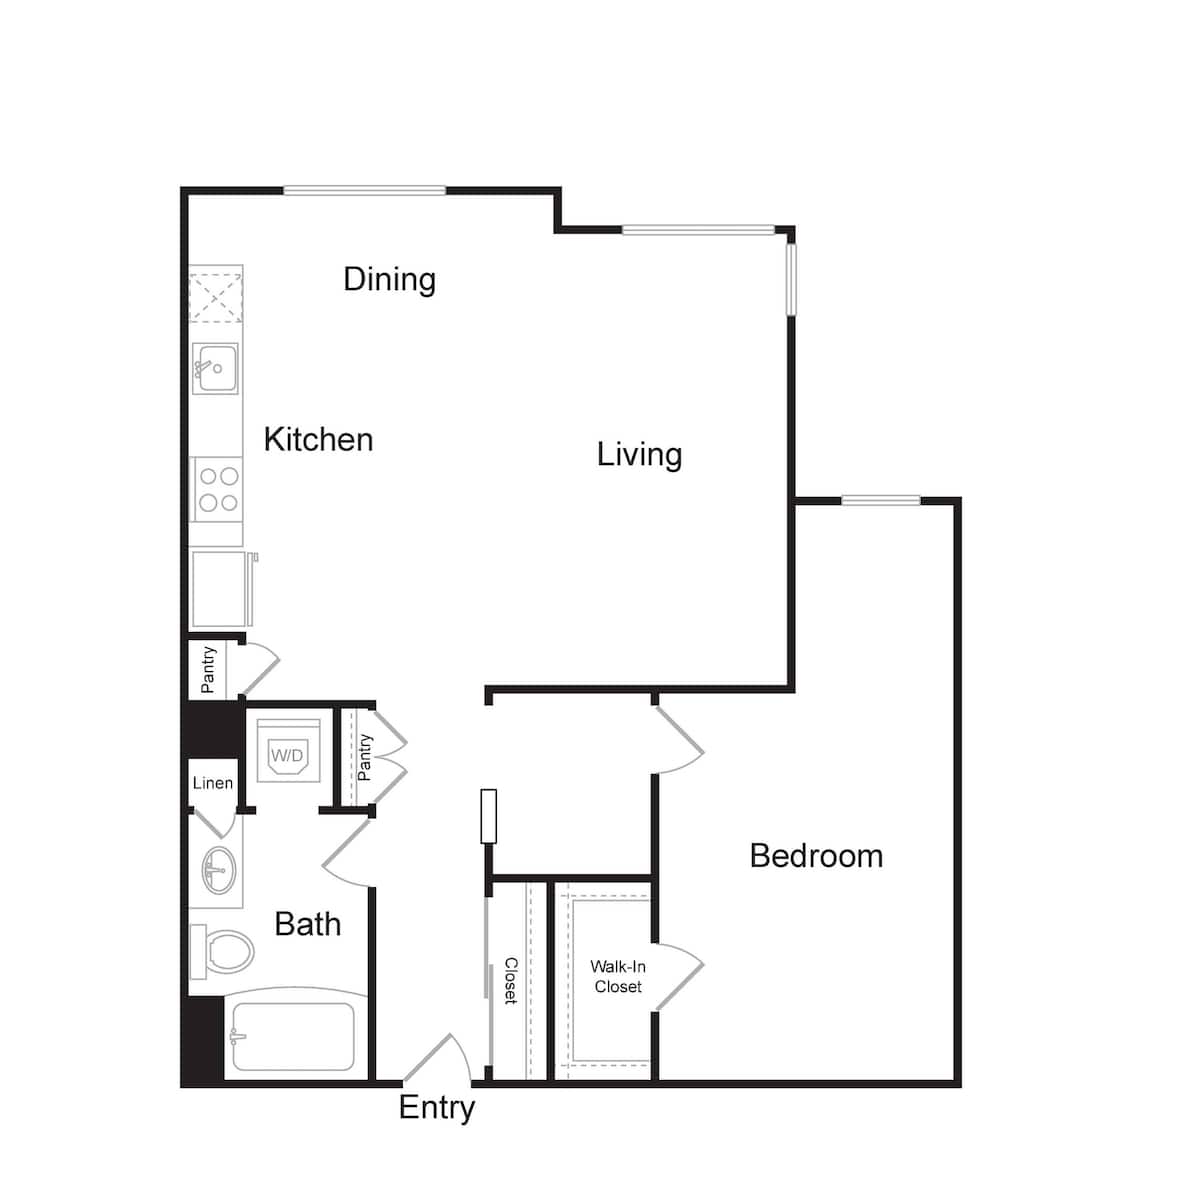 Floorplan diagram for A12, showing 1 bedroom